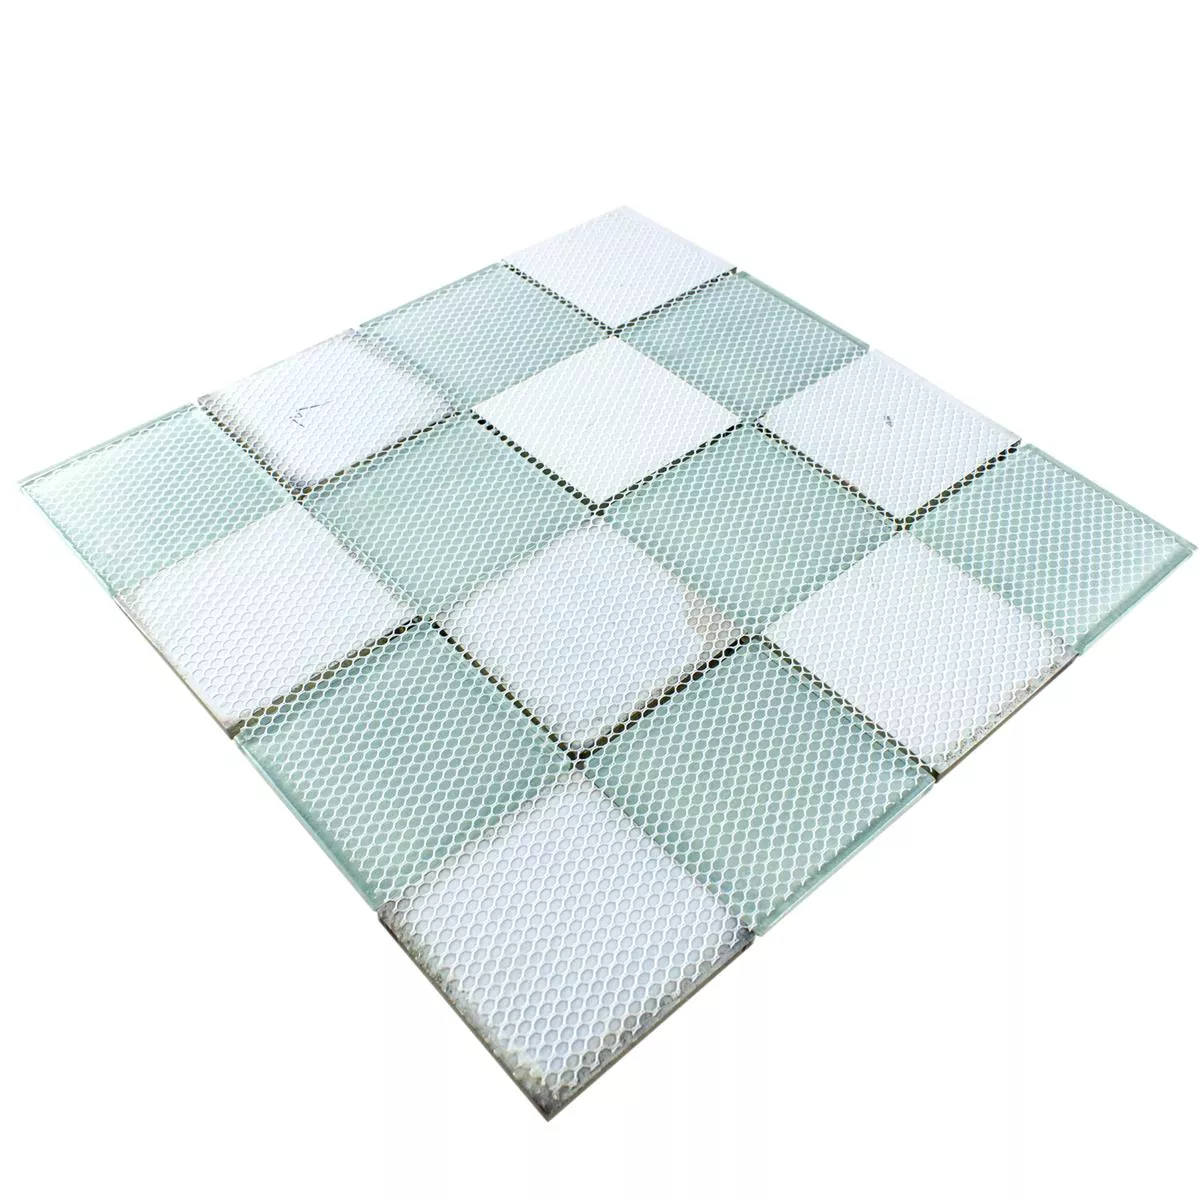 Glass Mosaic Tiles Cement Optic Granada Light Beige